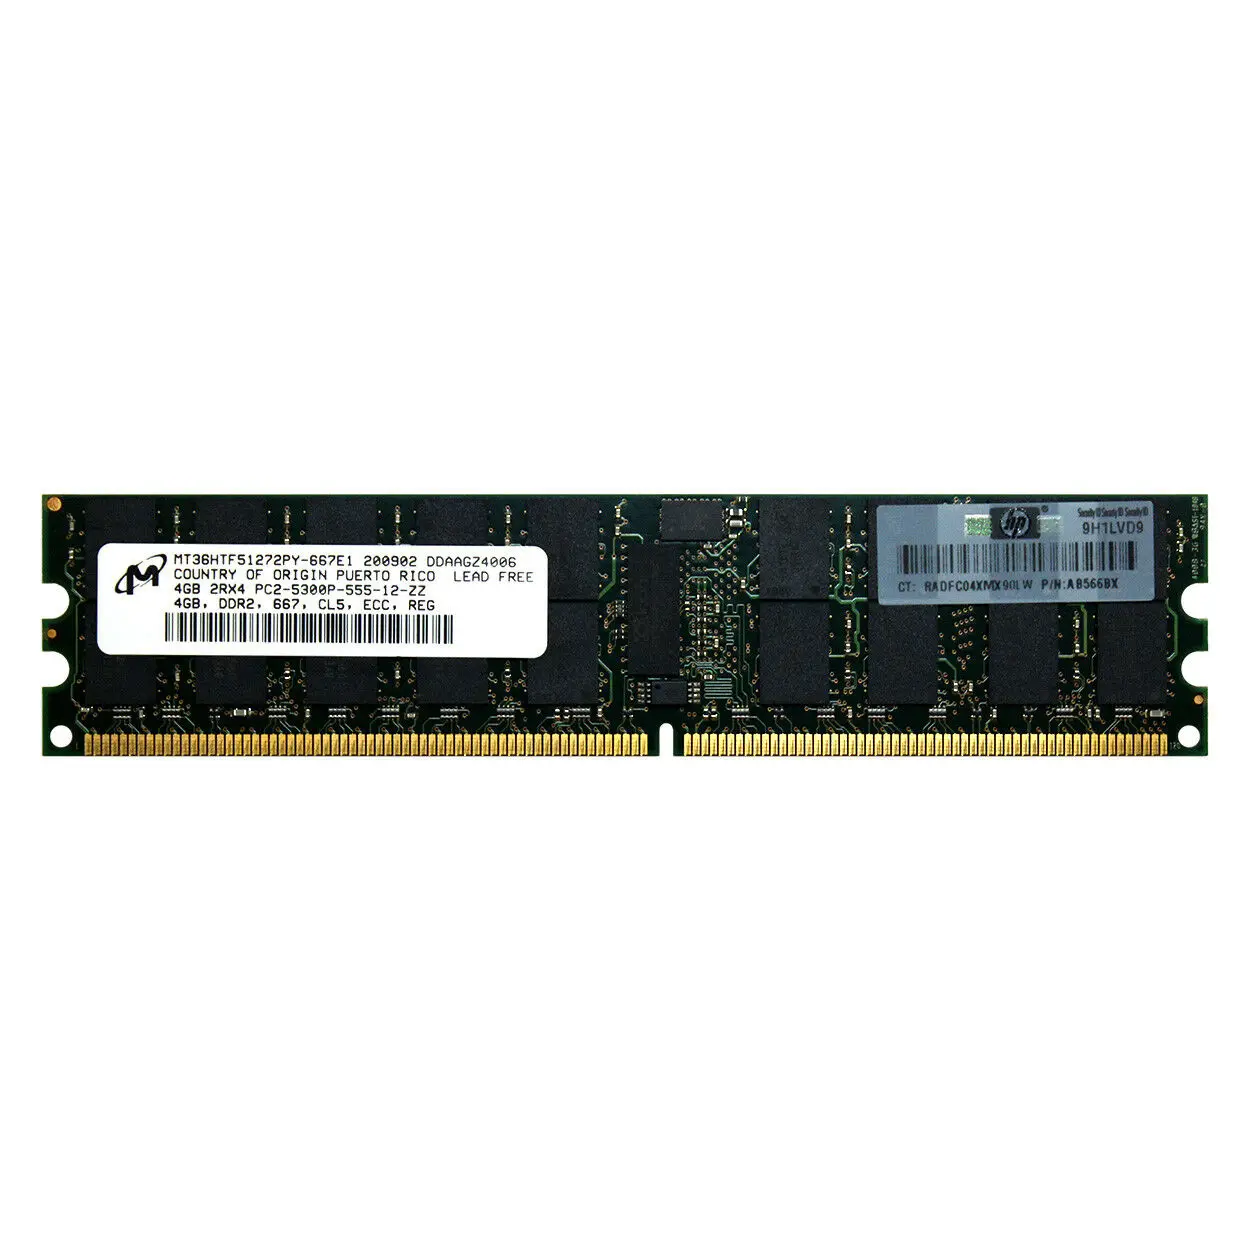 

HPE AB566BX 4GB DDR2 PC2-5300R 667MHz ECC REGISTERED SERVER MEMORY RAM